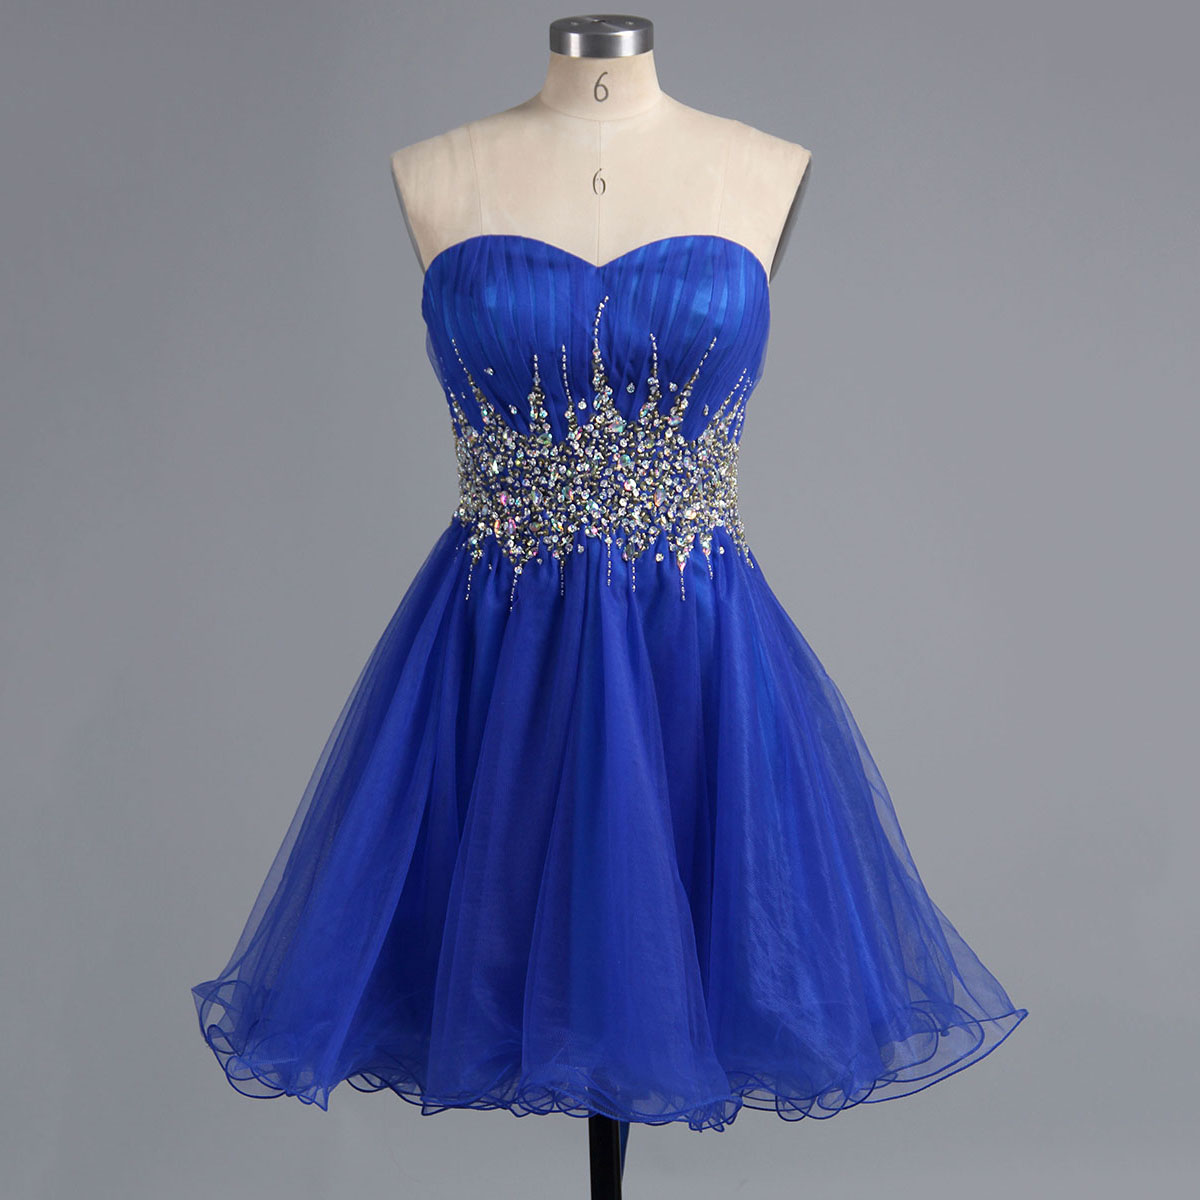 Royal Blue Chiffon Cocktail Dress, Crystal Embellished Waistline Graduation Dress, Sweetheart Neckline Evening Dress, A-line Short Homecoming